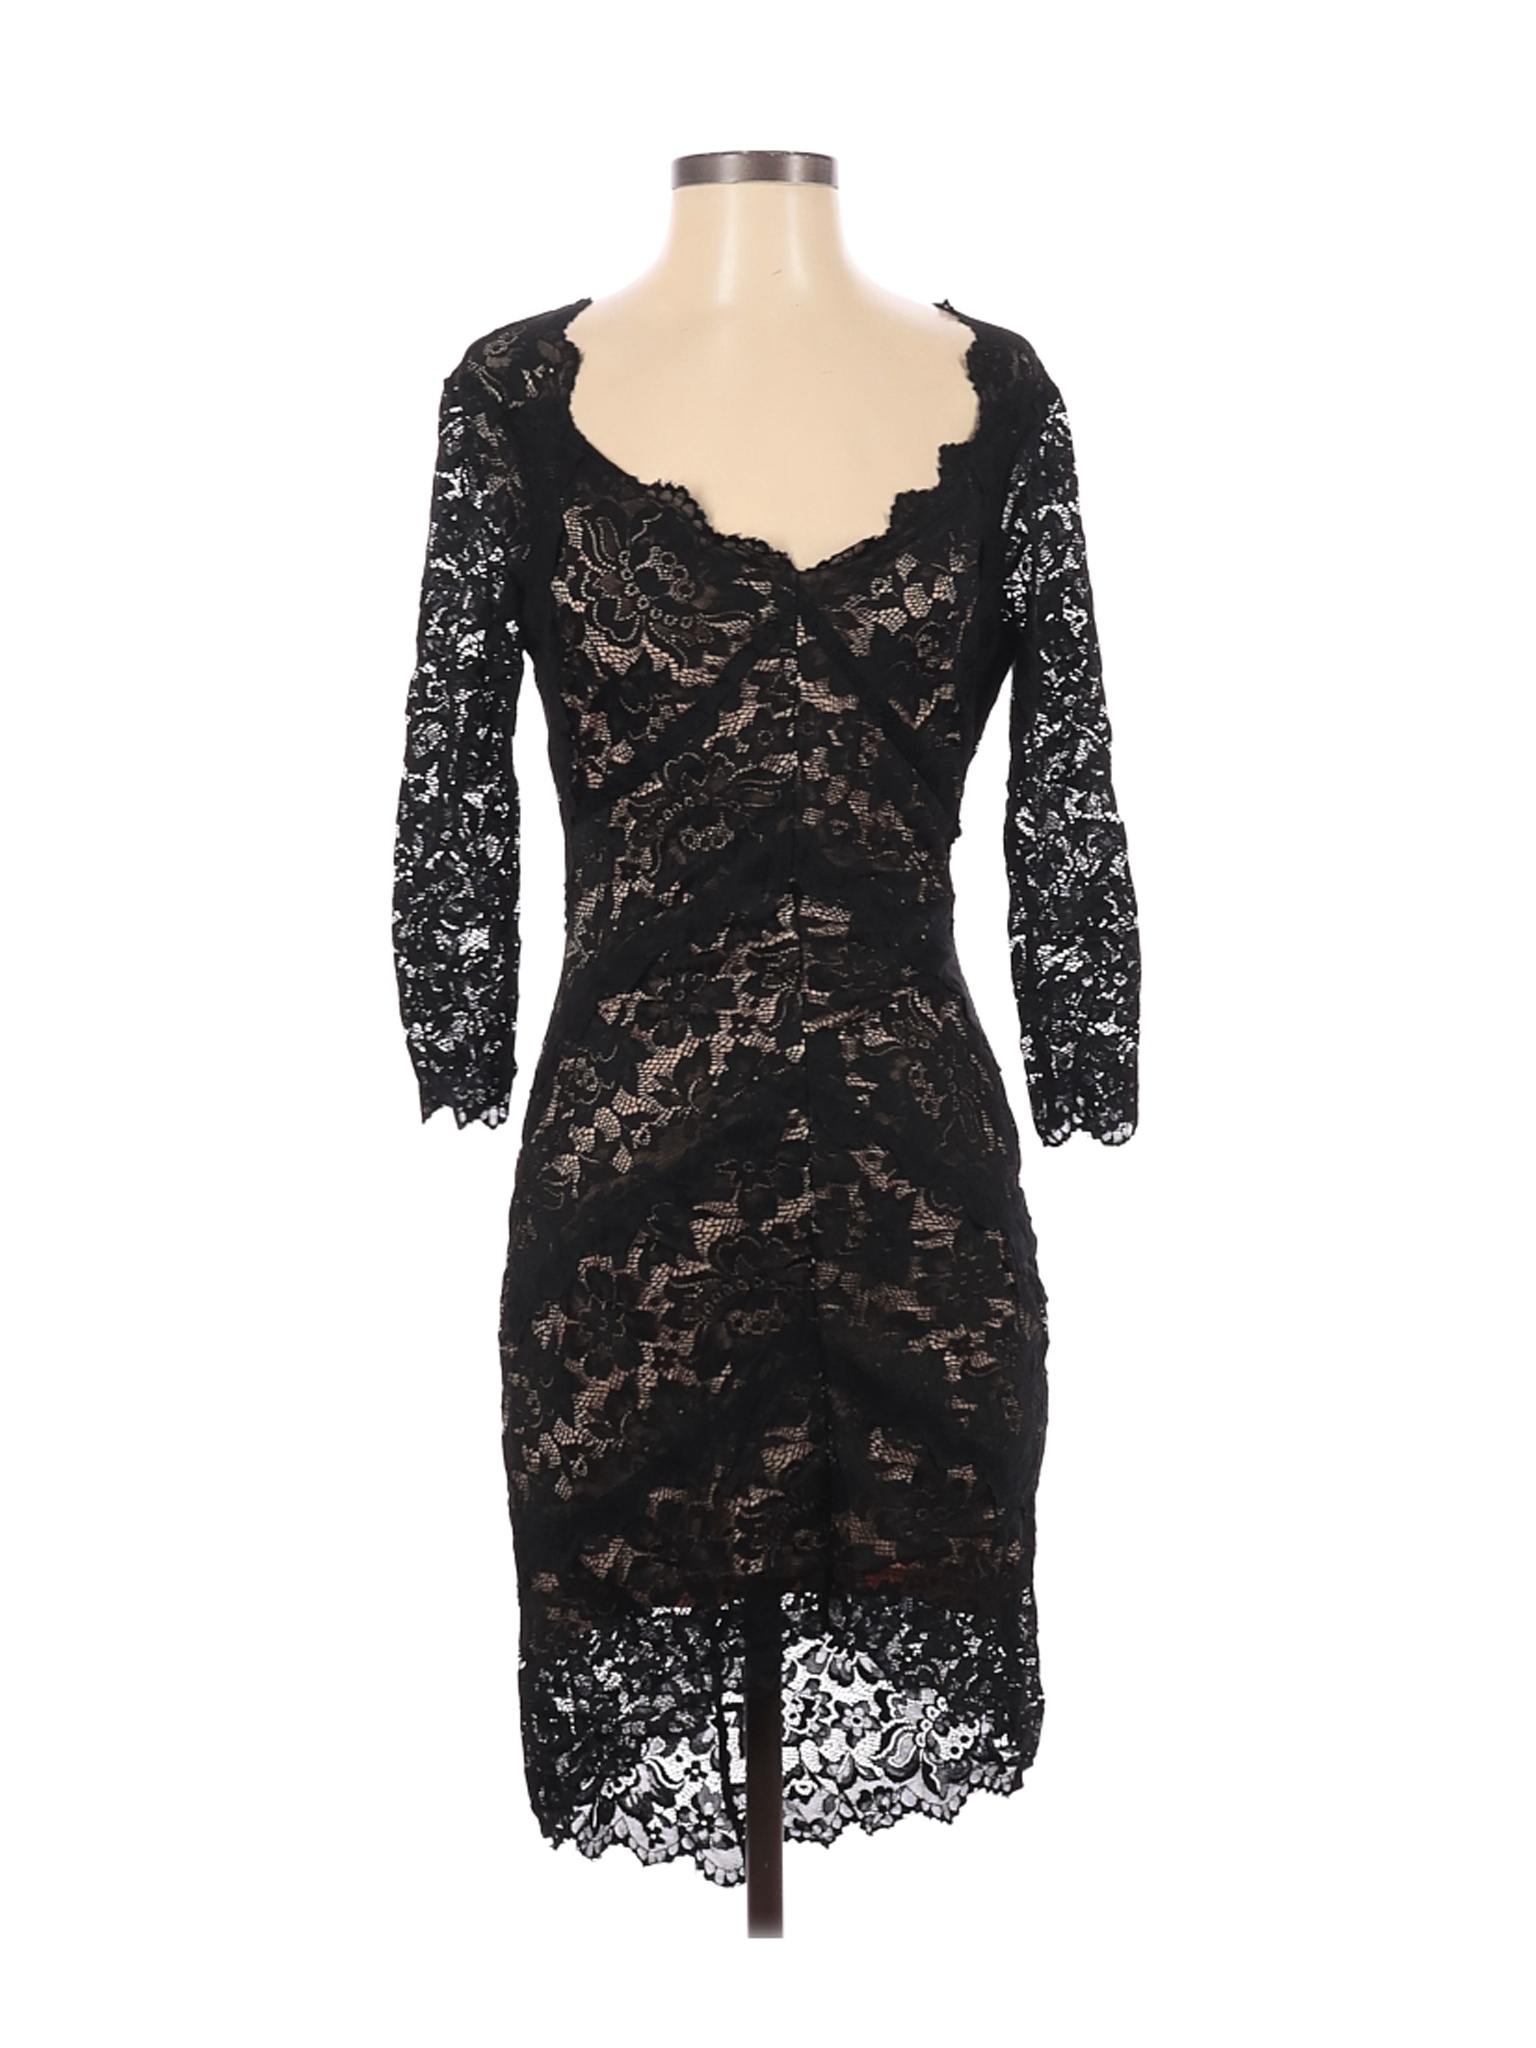 Venus Women Black Cocktail Dress S | eBay